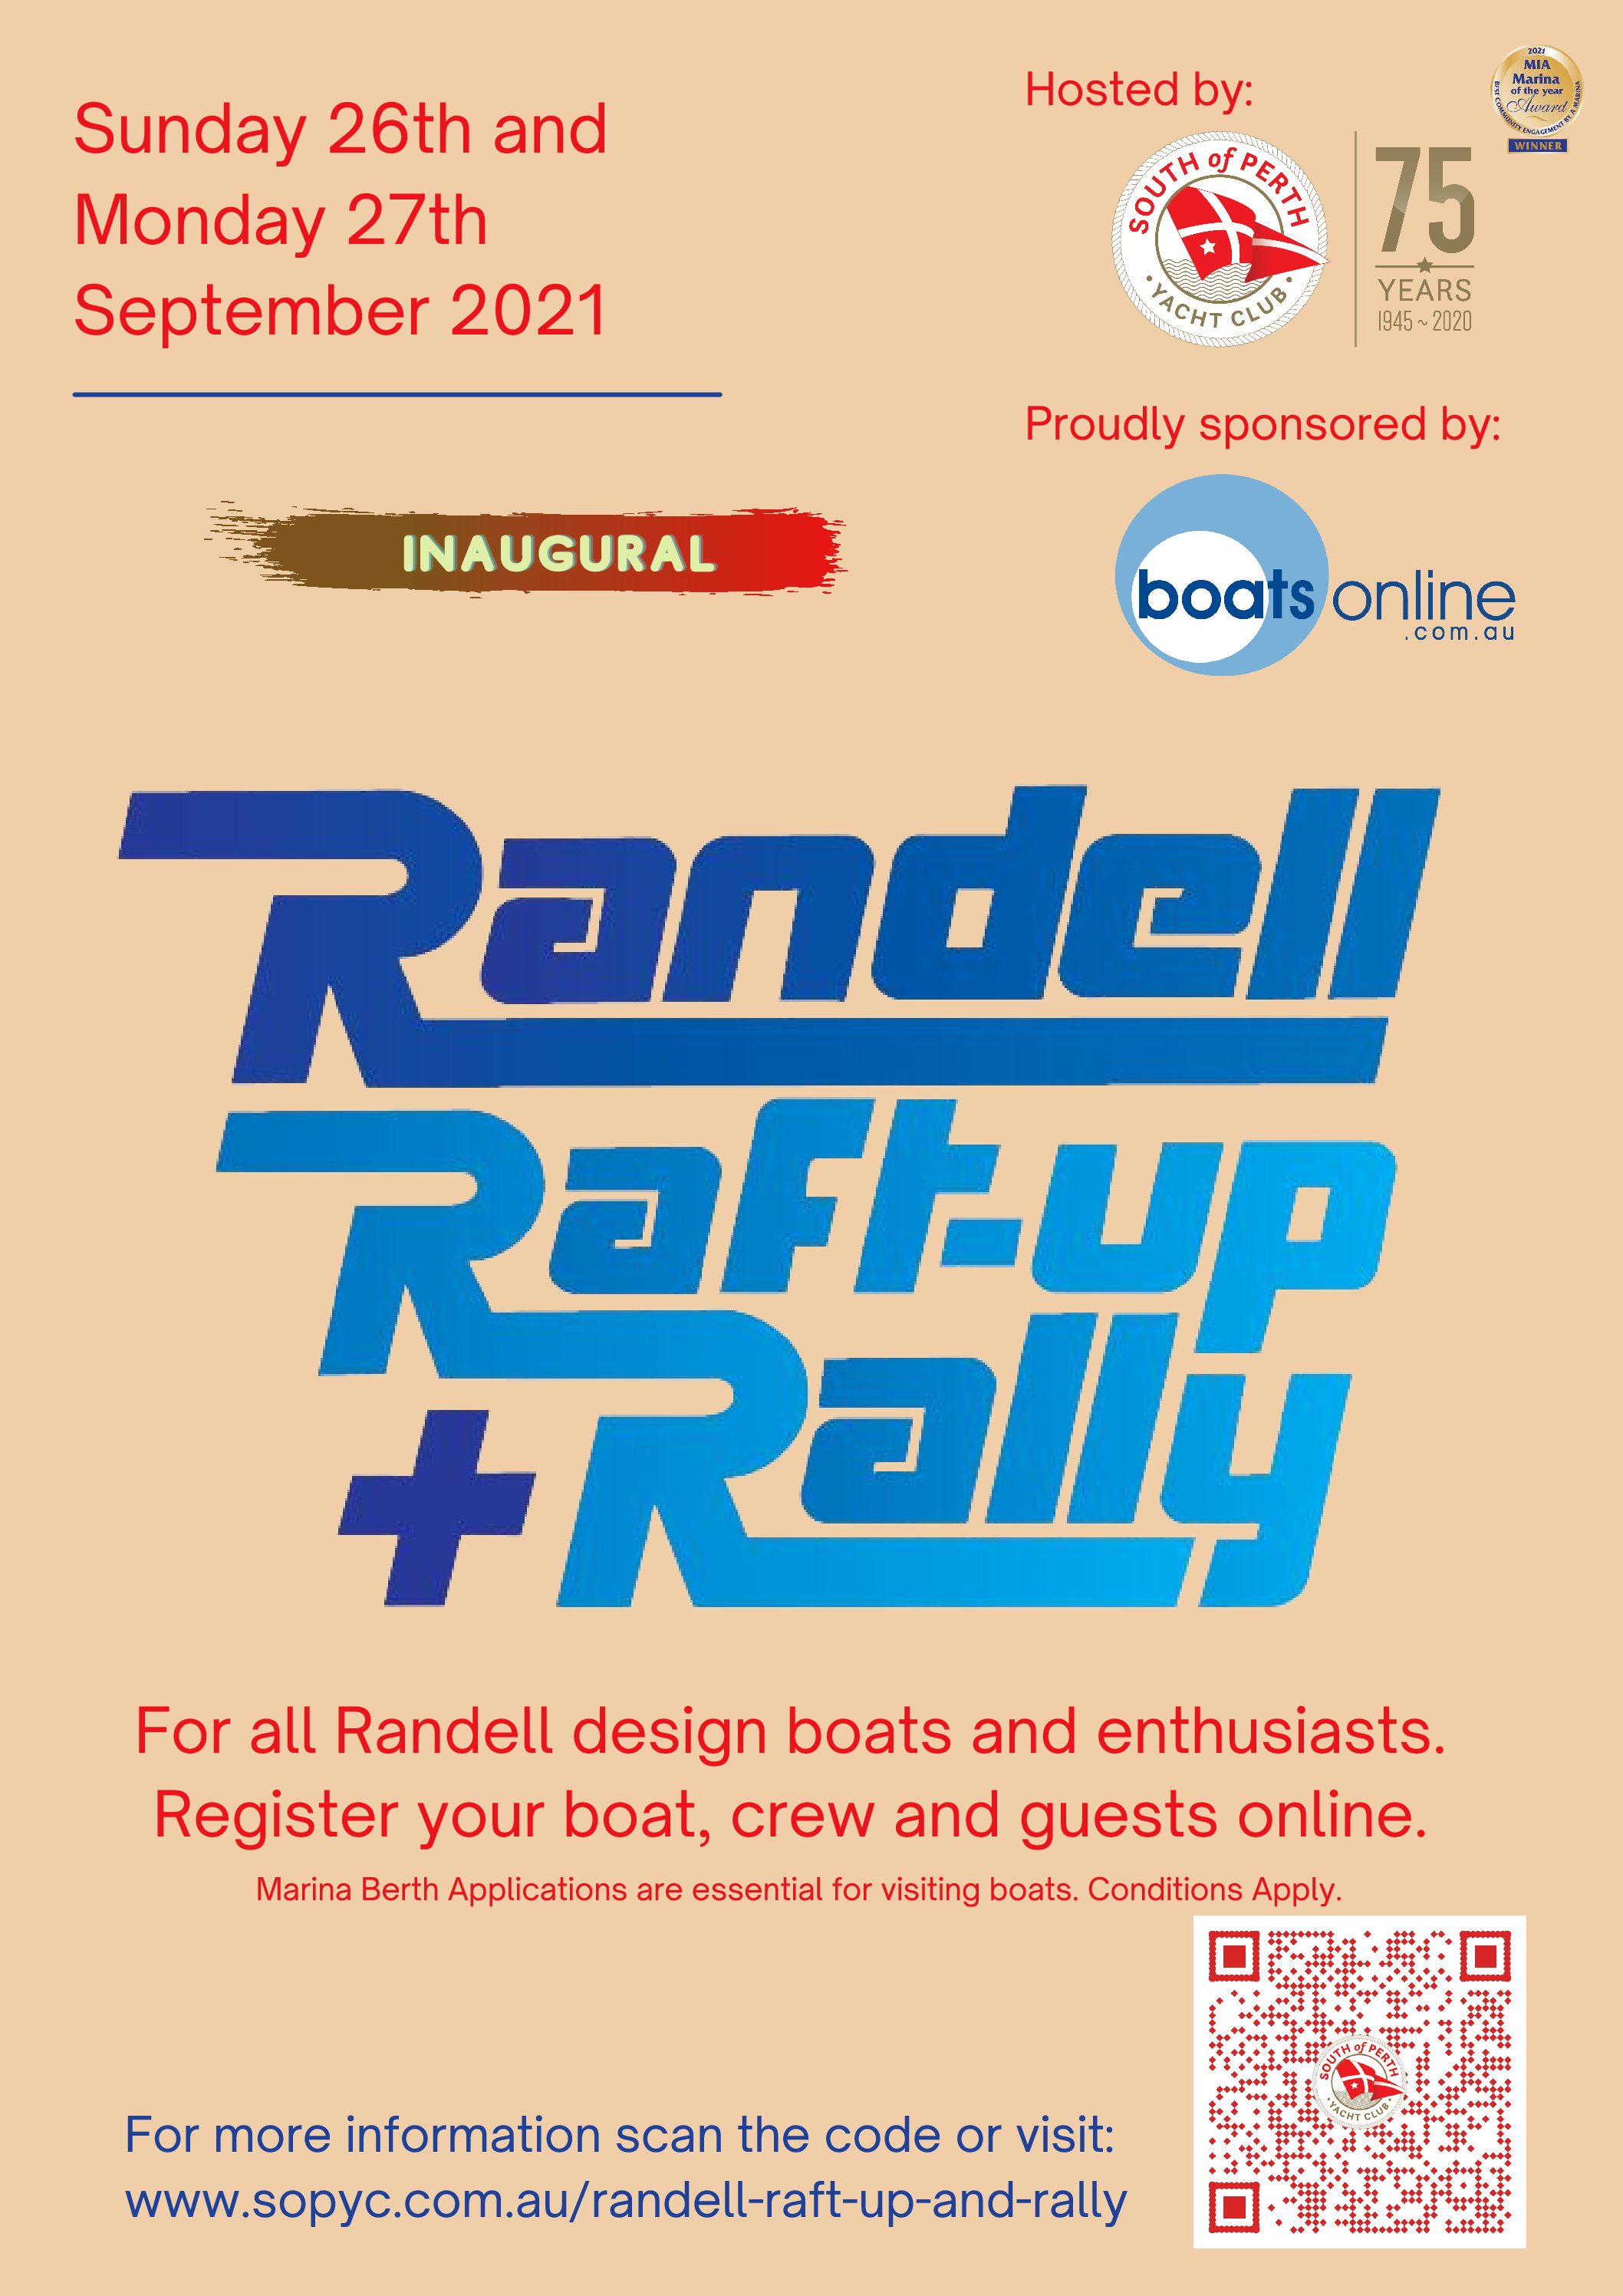 Randell Raft-Up + Rally